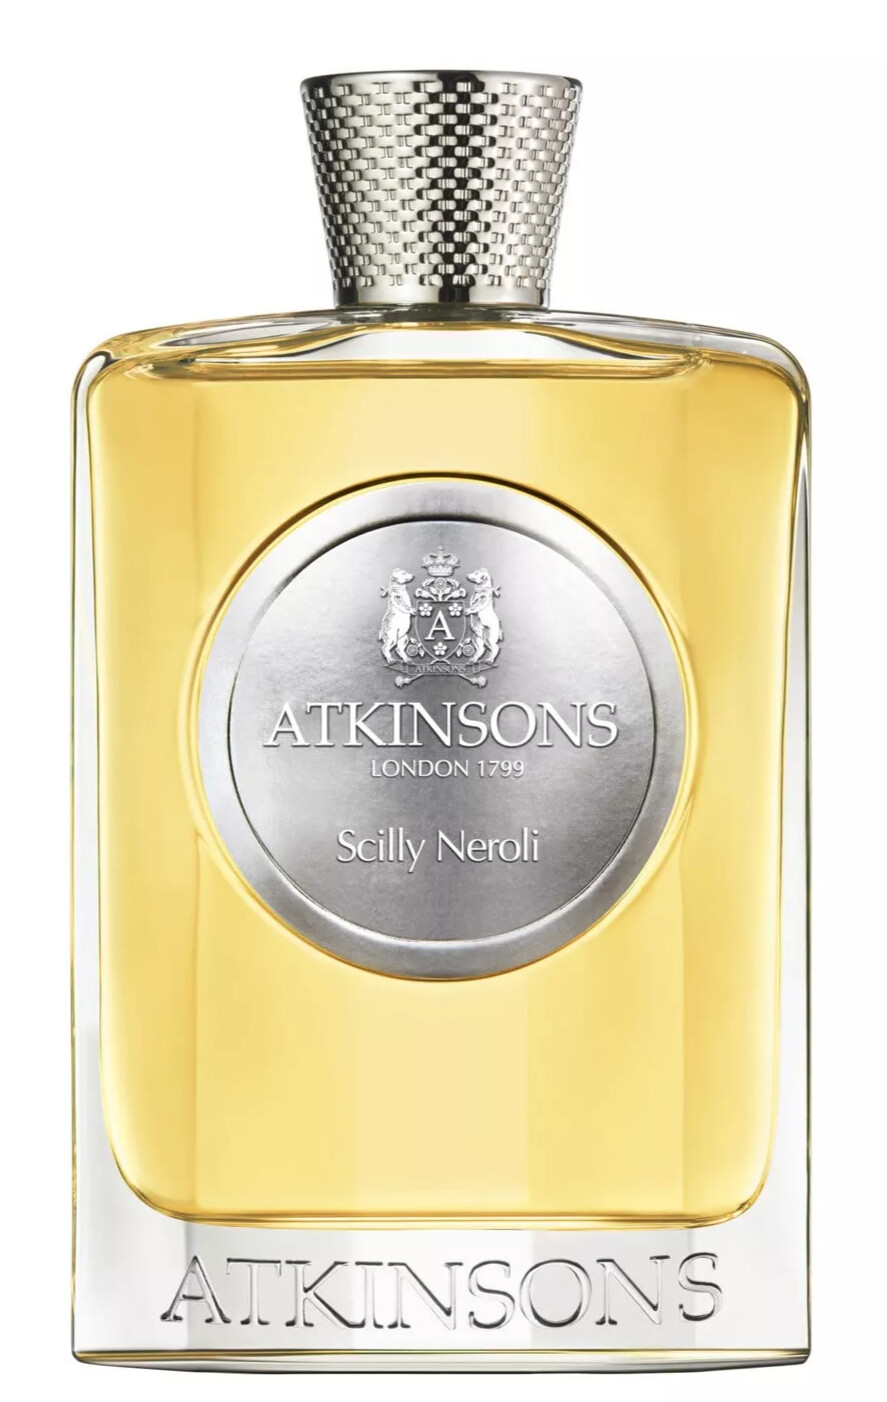 Luxus Parfum Atkinsons Scilly Neroli EDP 100ml kaufen